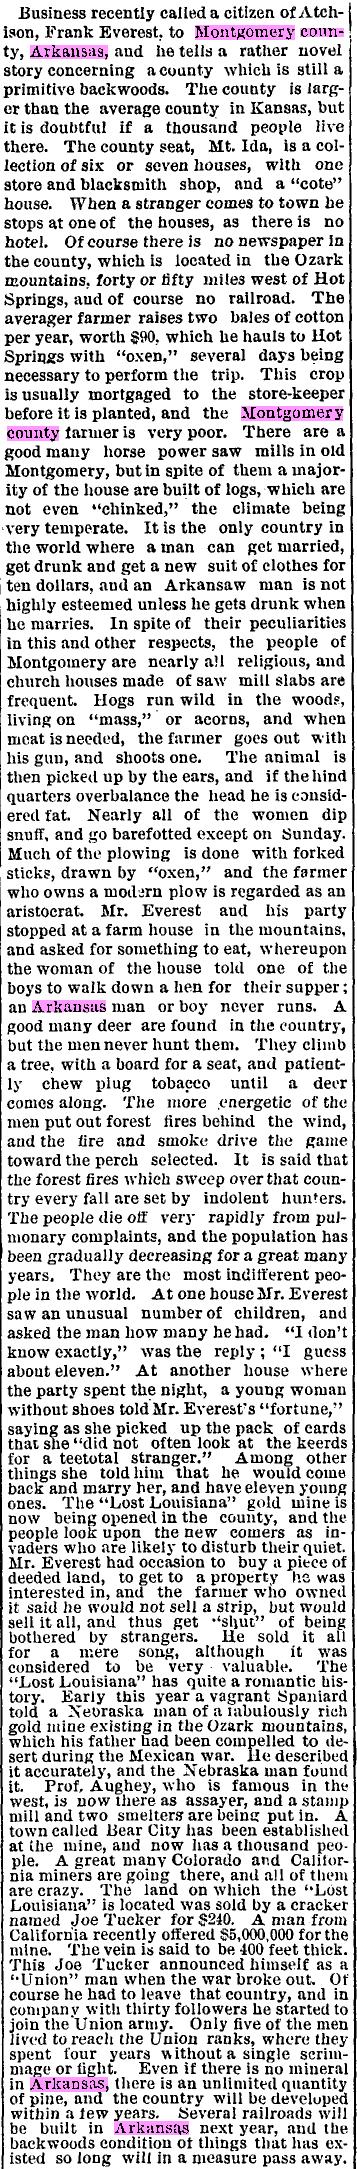 The Atchison Daily Globe, (Atchison, KS) Monday, December 05, 1887;